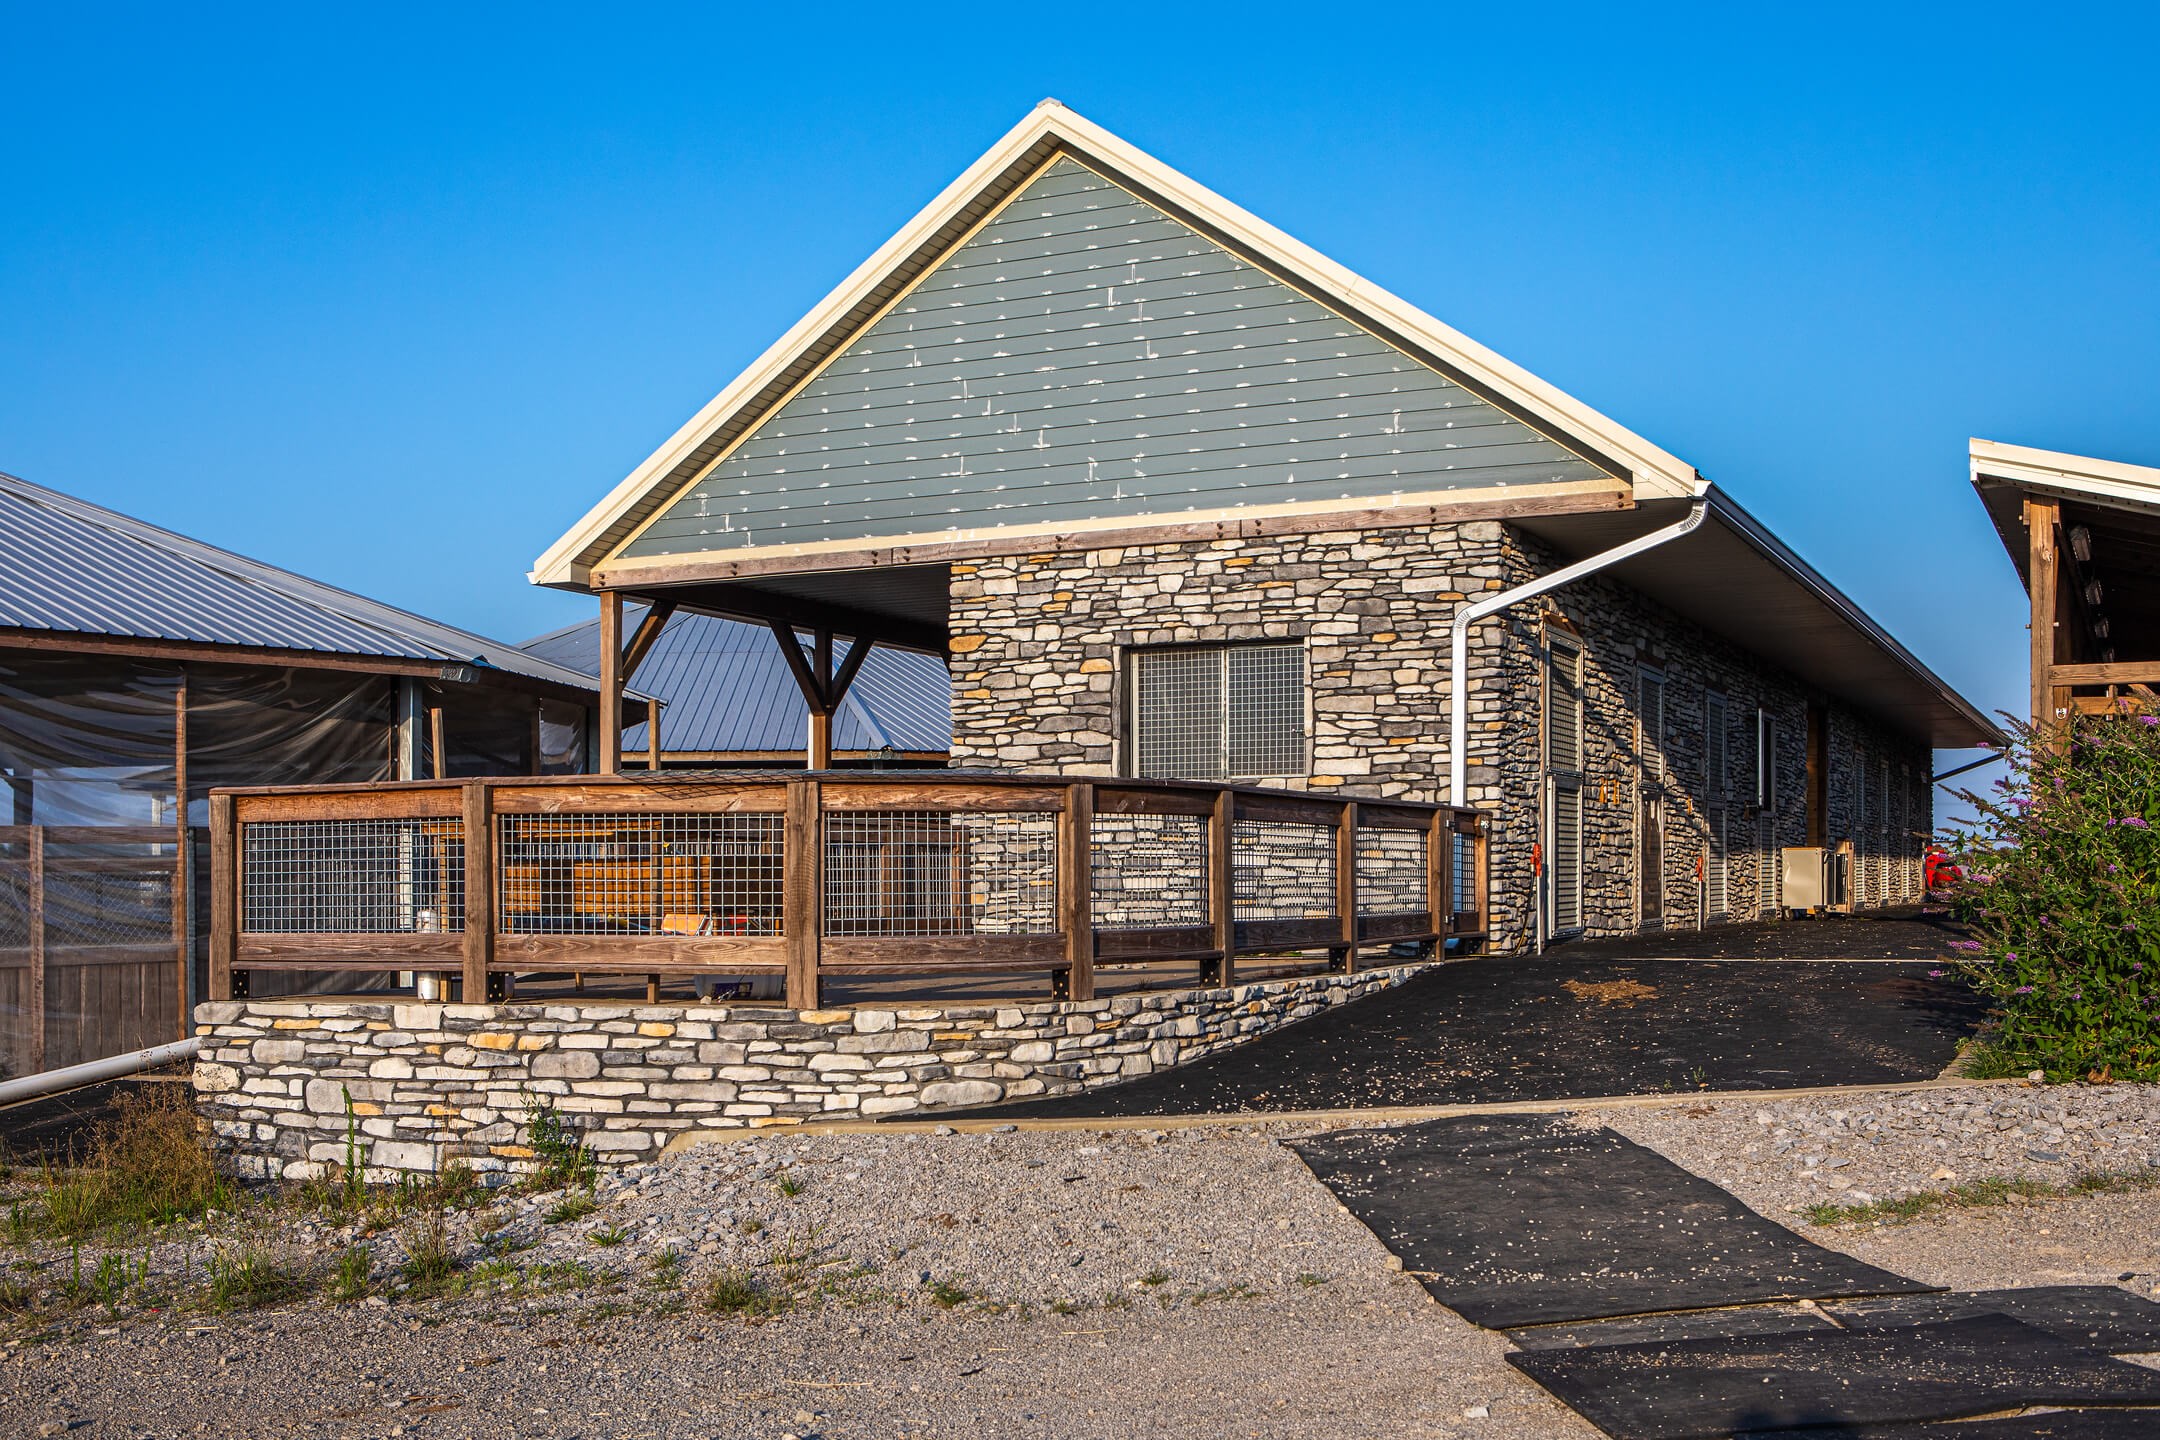 Glen-Gery | Ledgestone Kentucky Gray building stone veneer on exterior of horse barn